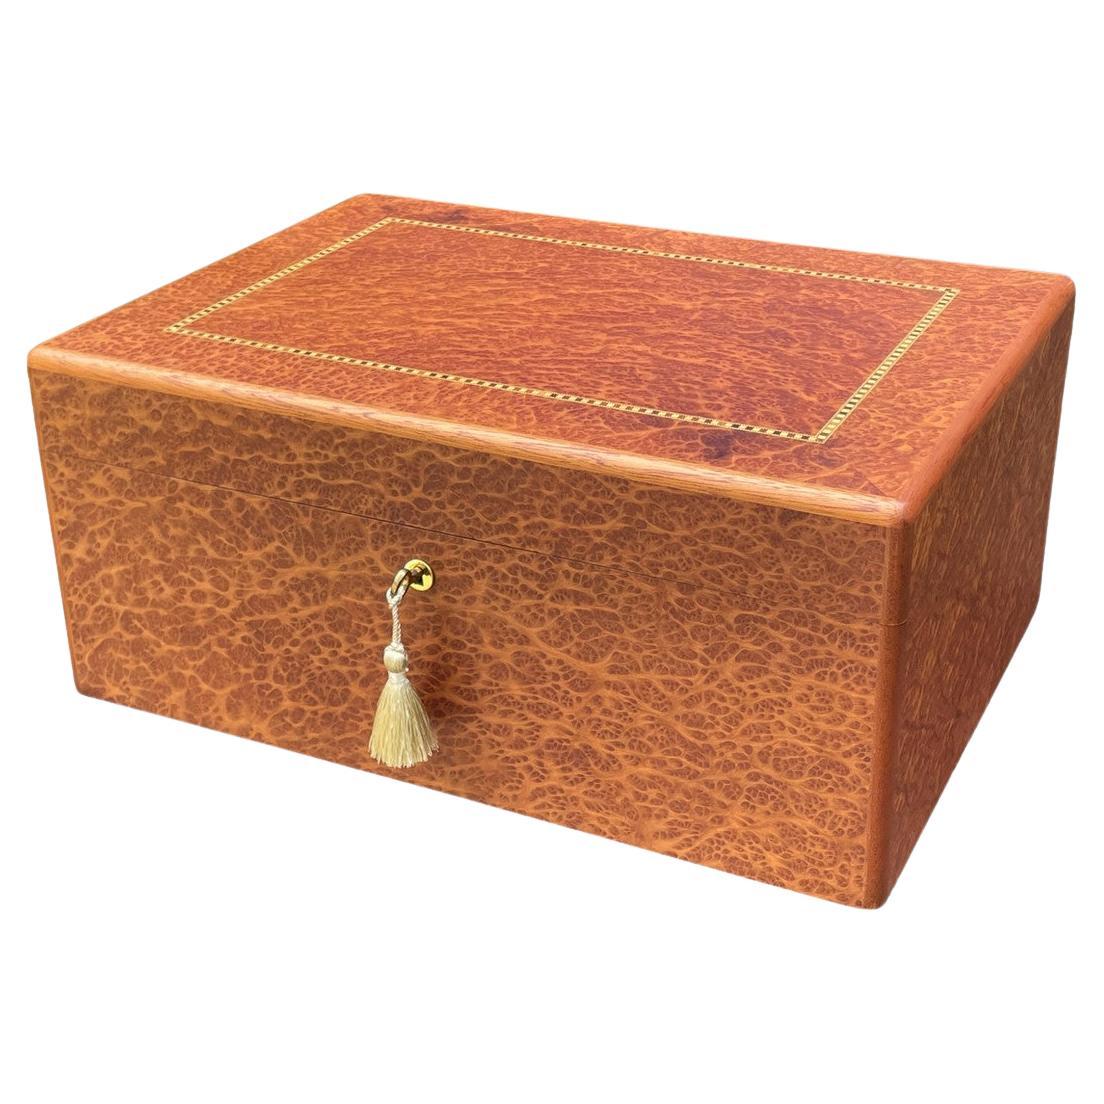 Vavona Burl Wood Handmade Irish Lady's Jewelry Casket Box by Manning Ireland New For Sale